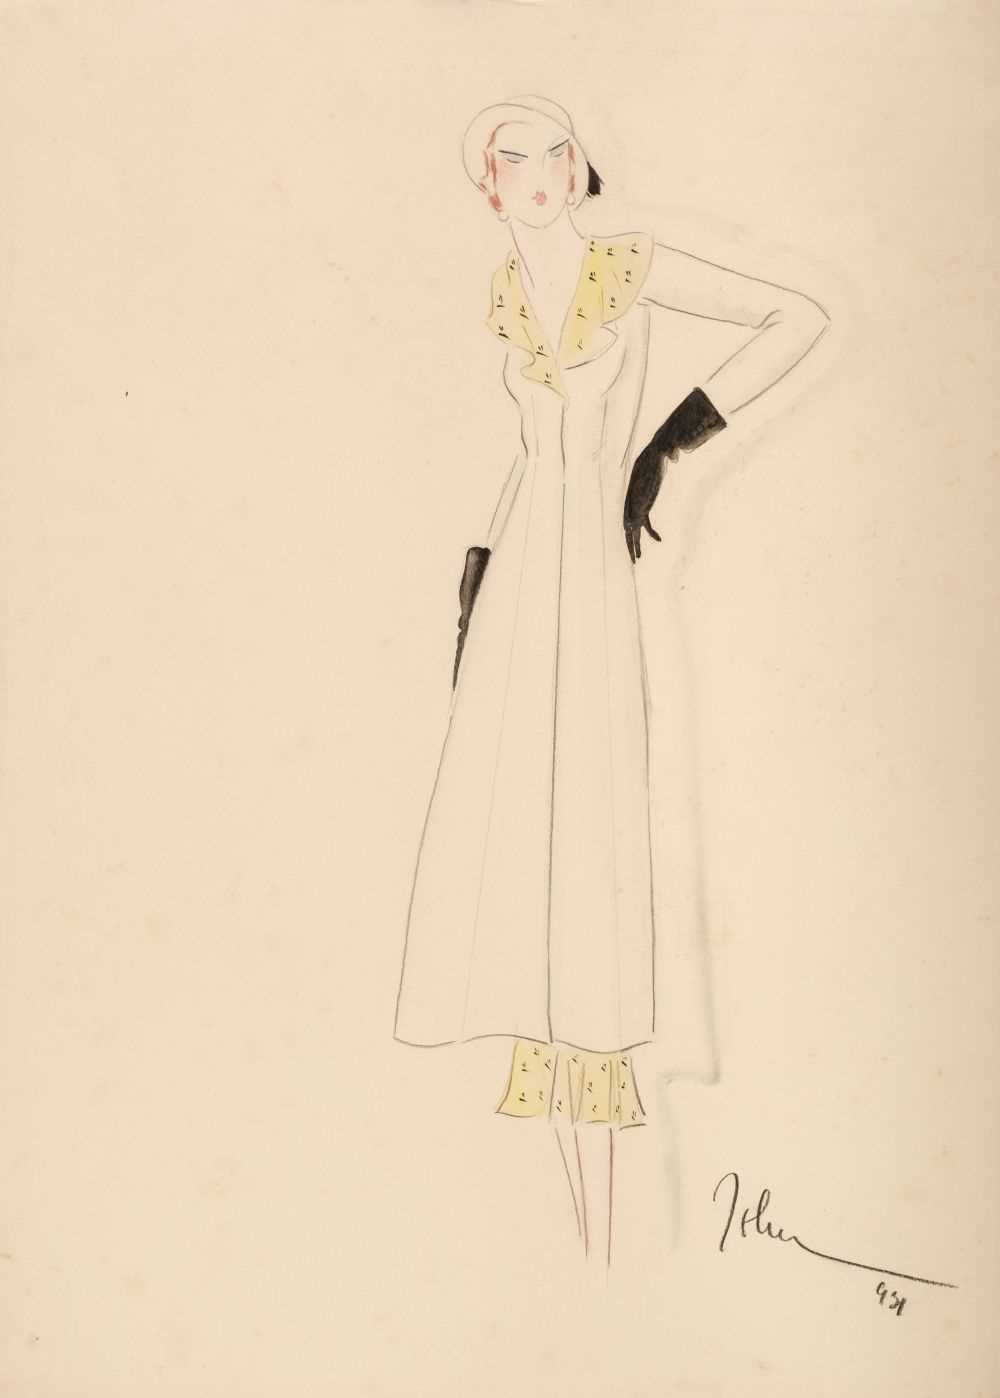 Lot 607 - Guida (John, 1896-1965). Fashion design for a long coat, circa 1930